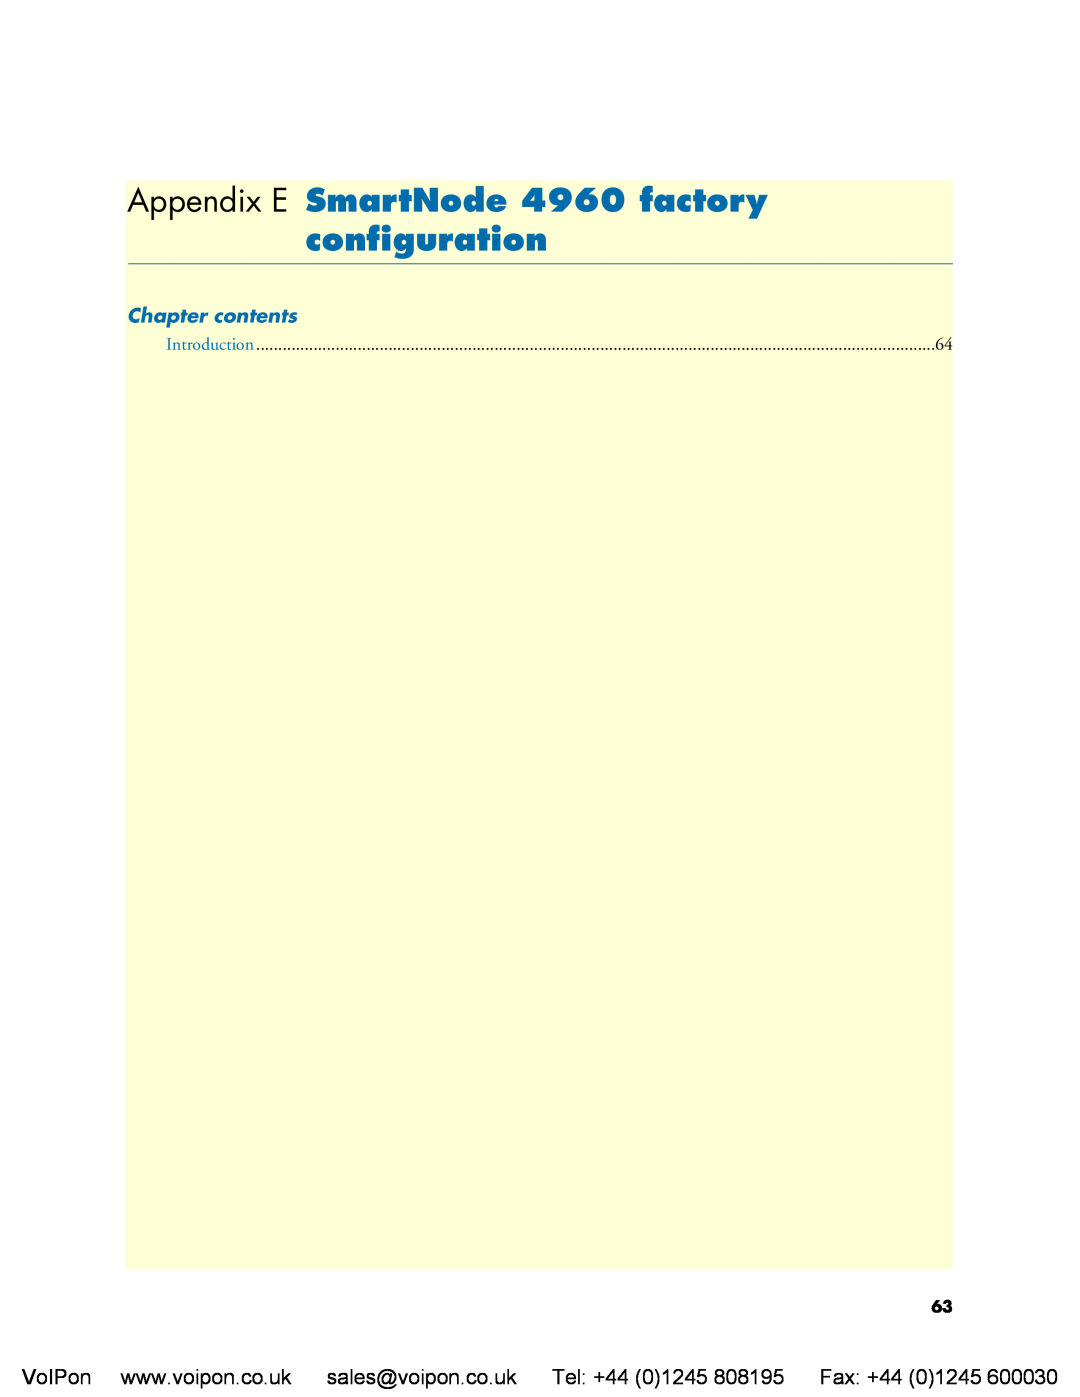 Patton electronic manual Appendix E SmartNode 4960 factory conﬁguration, Chapter contents 